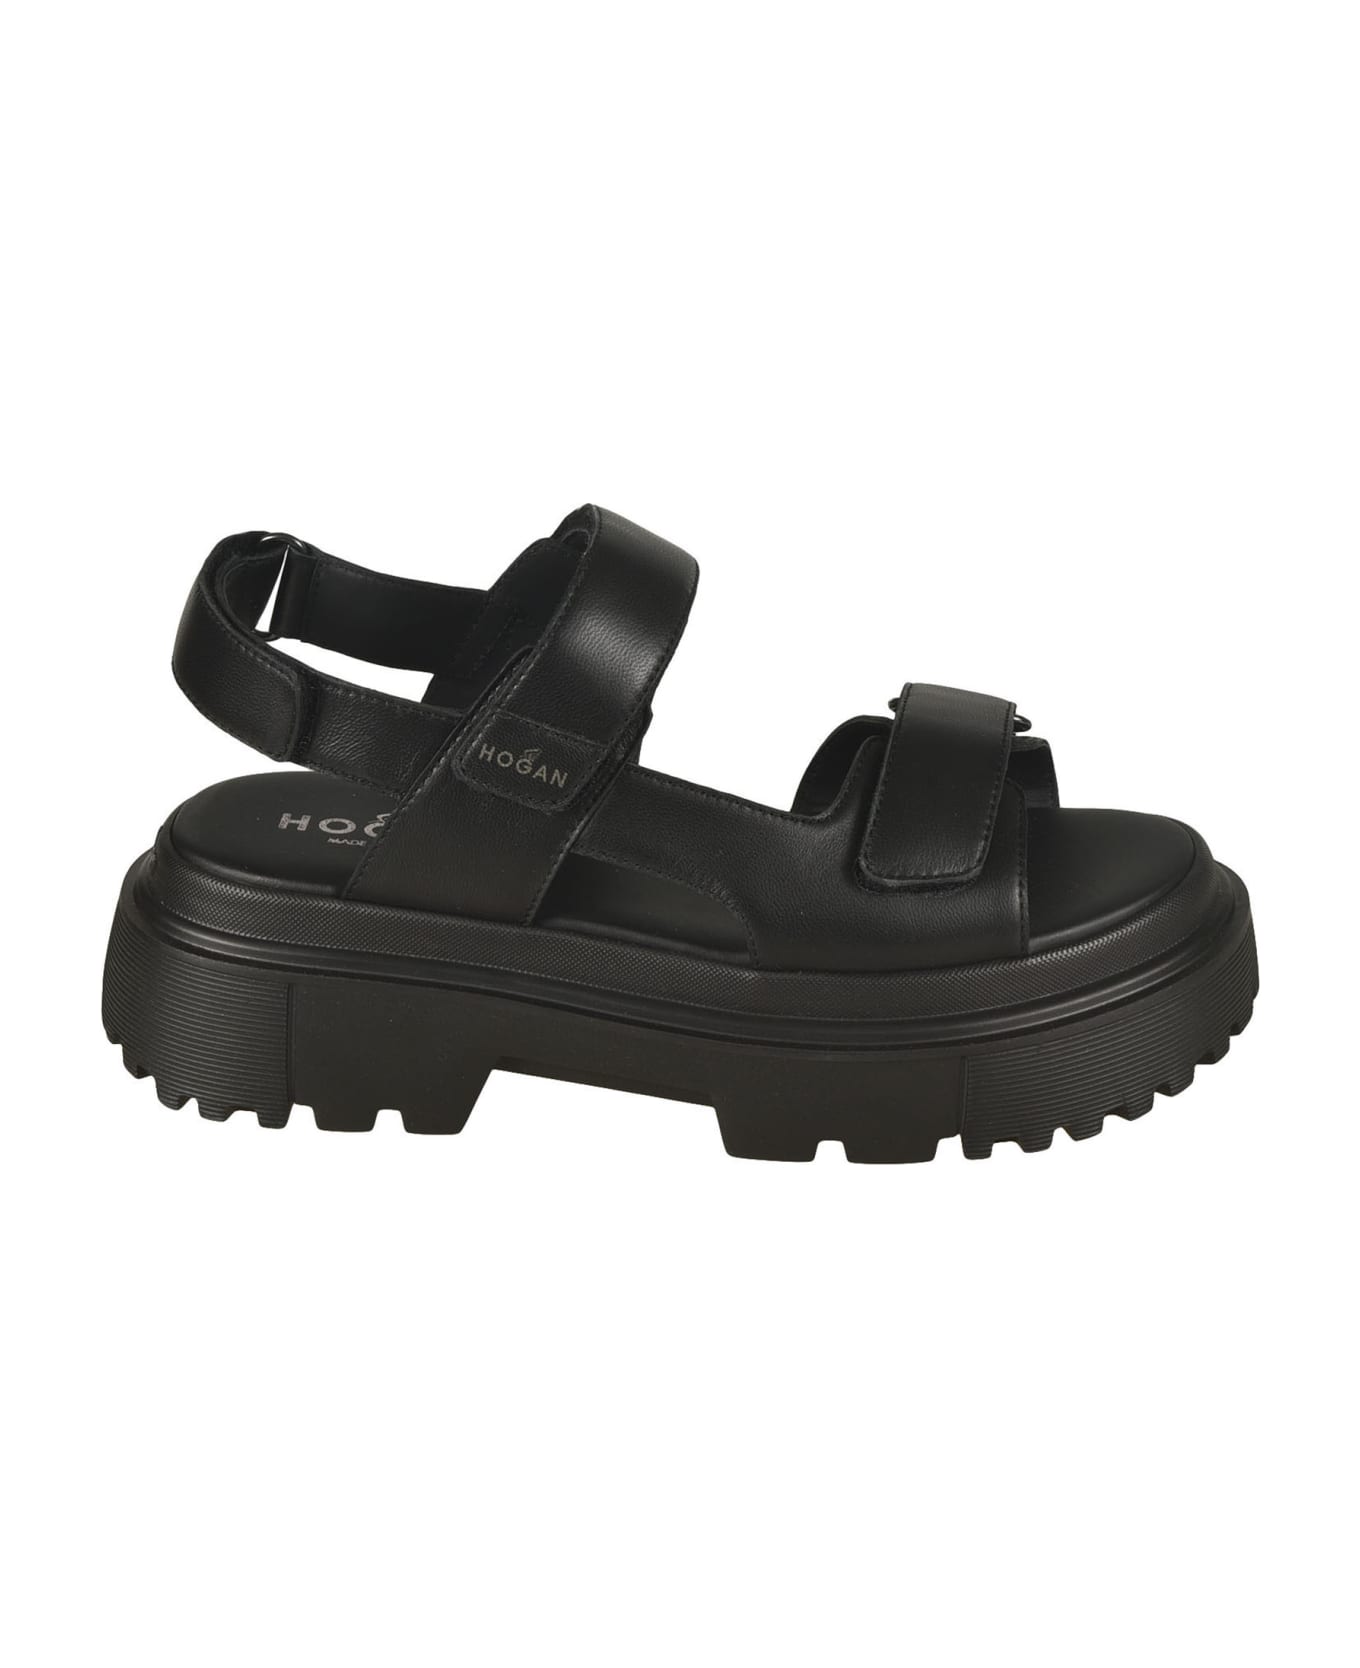 Hogan H644 Sandals - Black